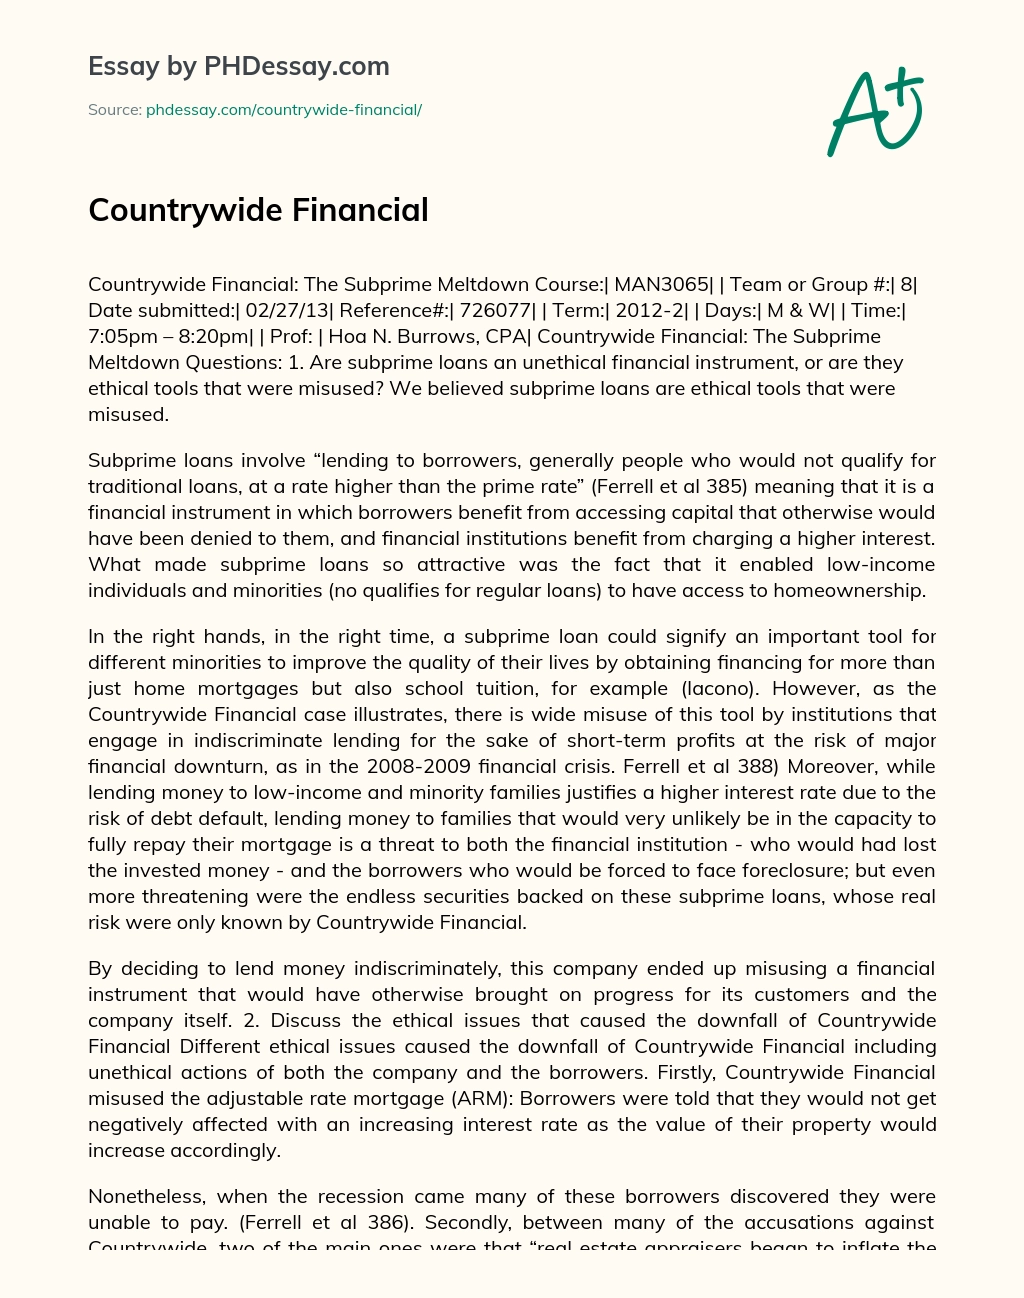 Countrywide Financial essay